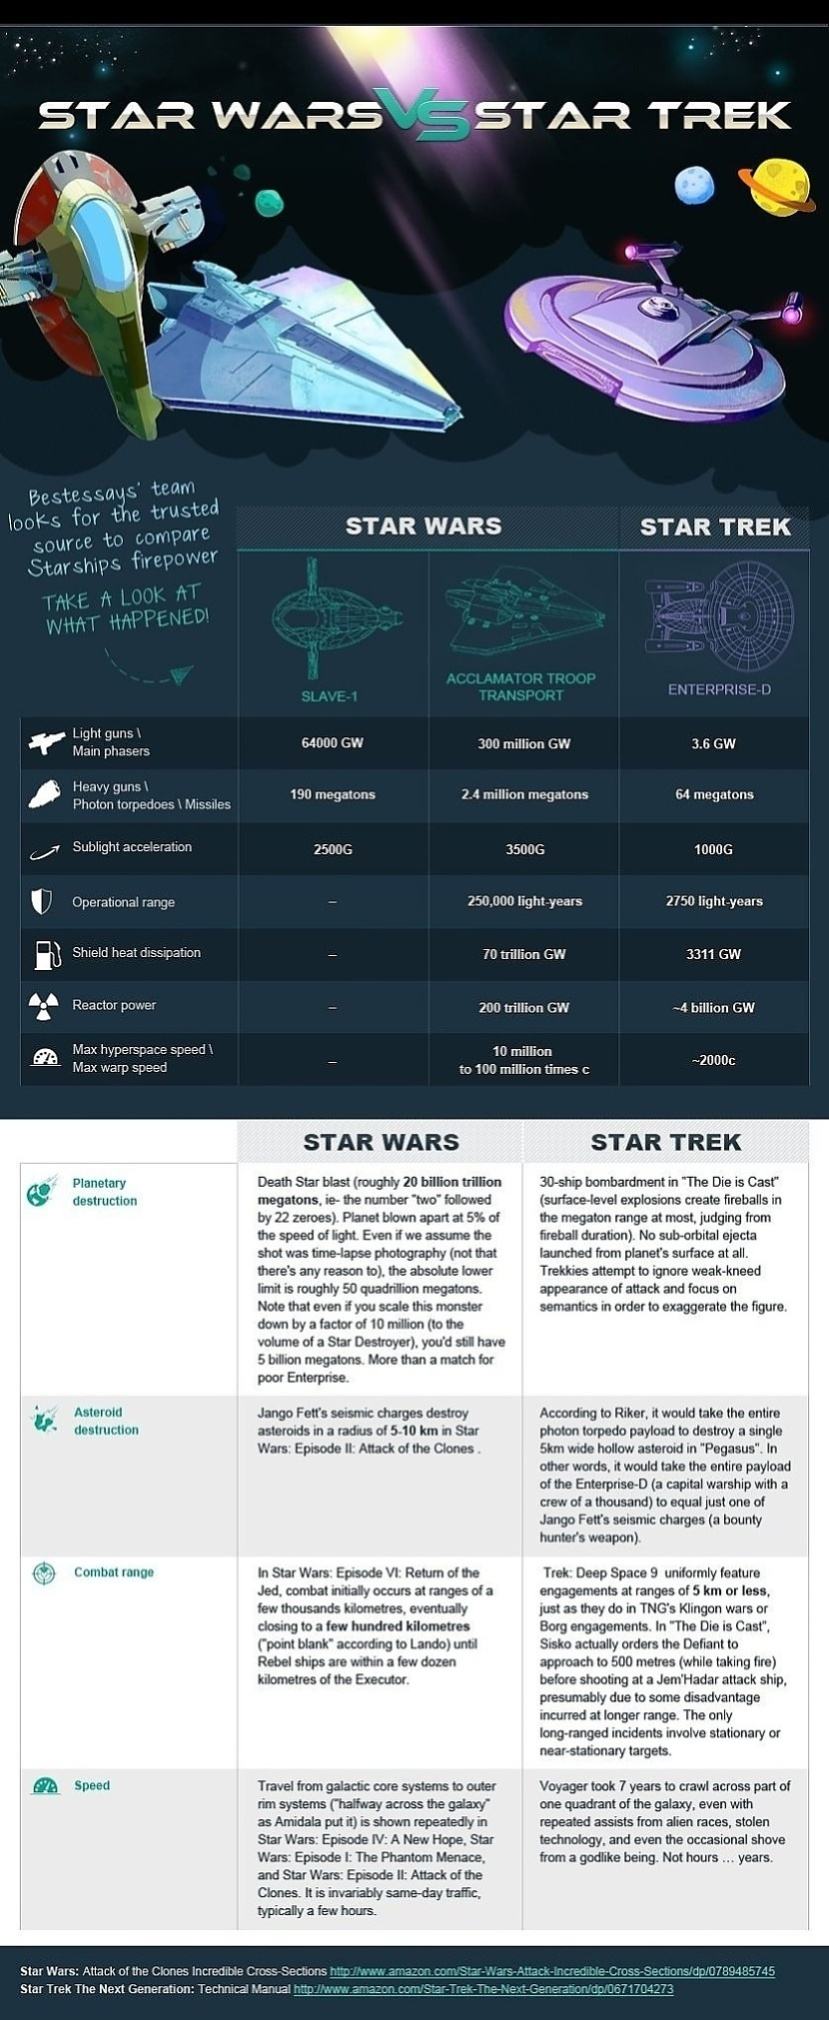 Obrázek -Star Wars vs Star Trek-      11.09.2012